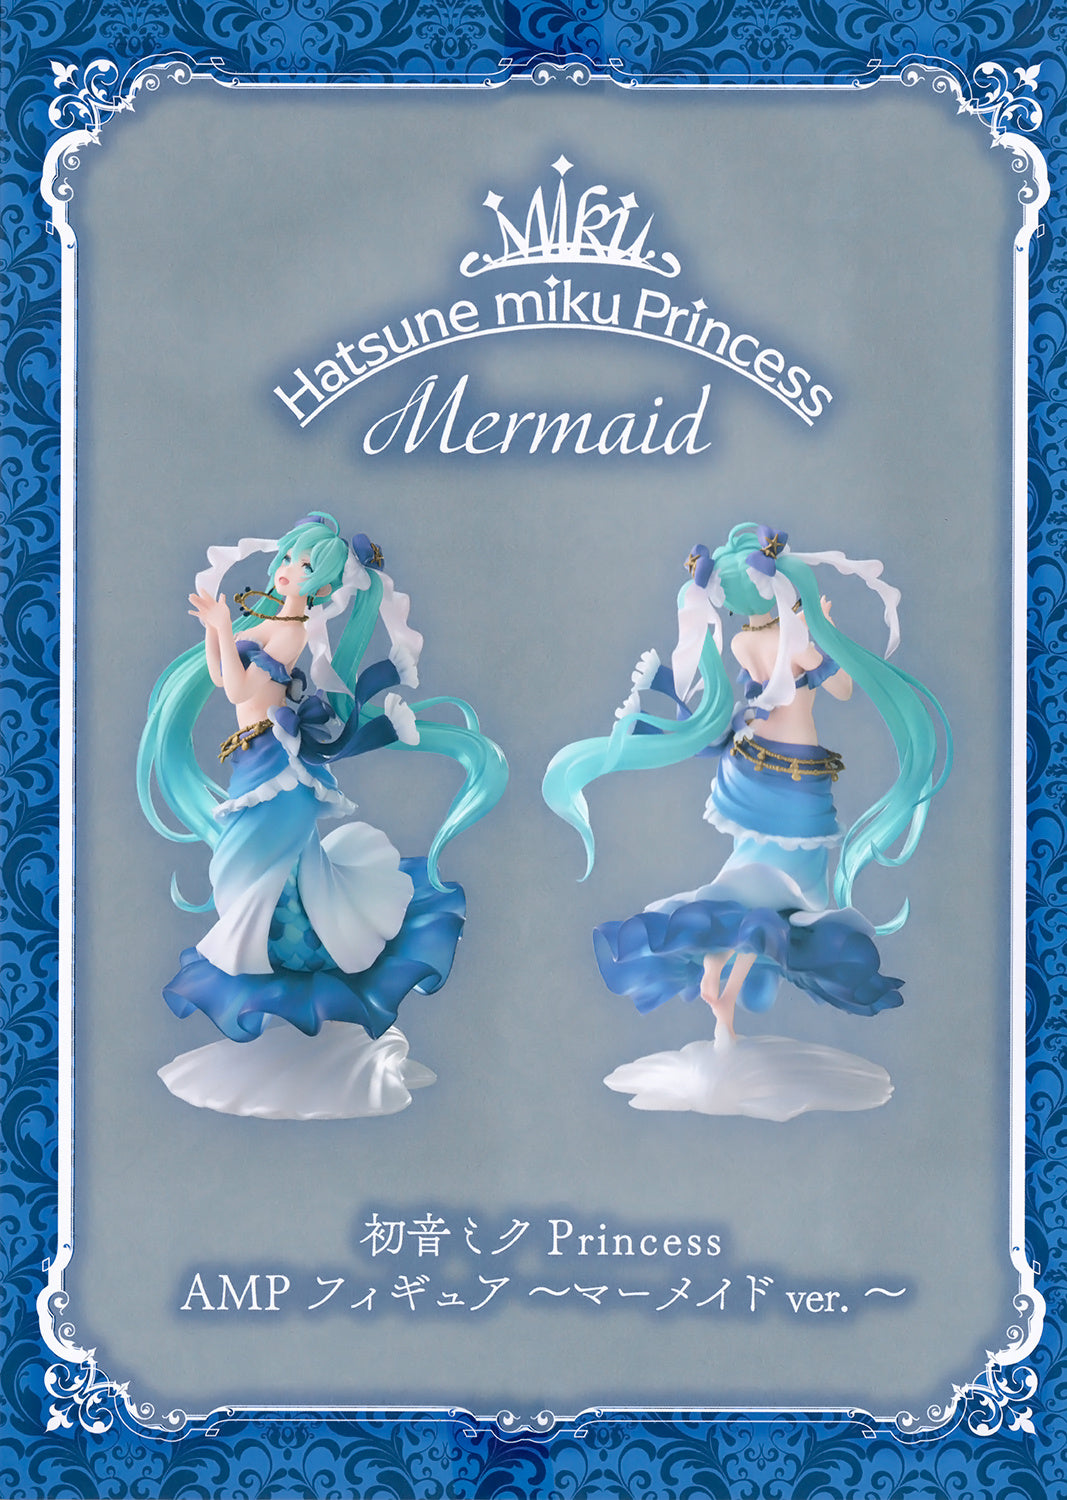 Miku Hatsune Princess AMP Figure Mermaid Ver.